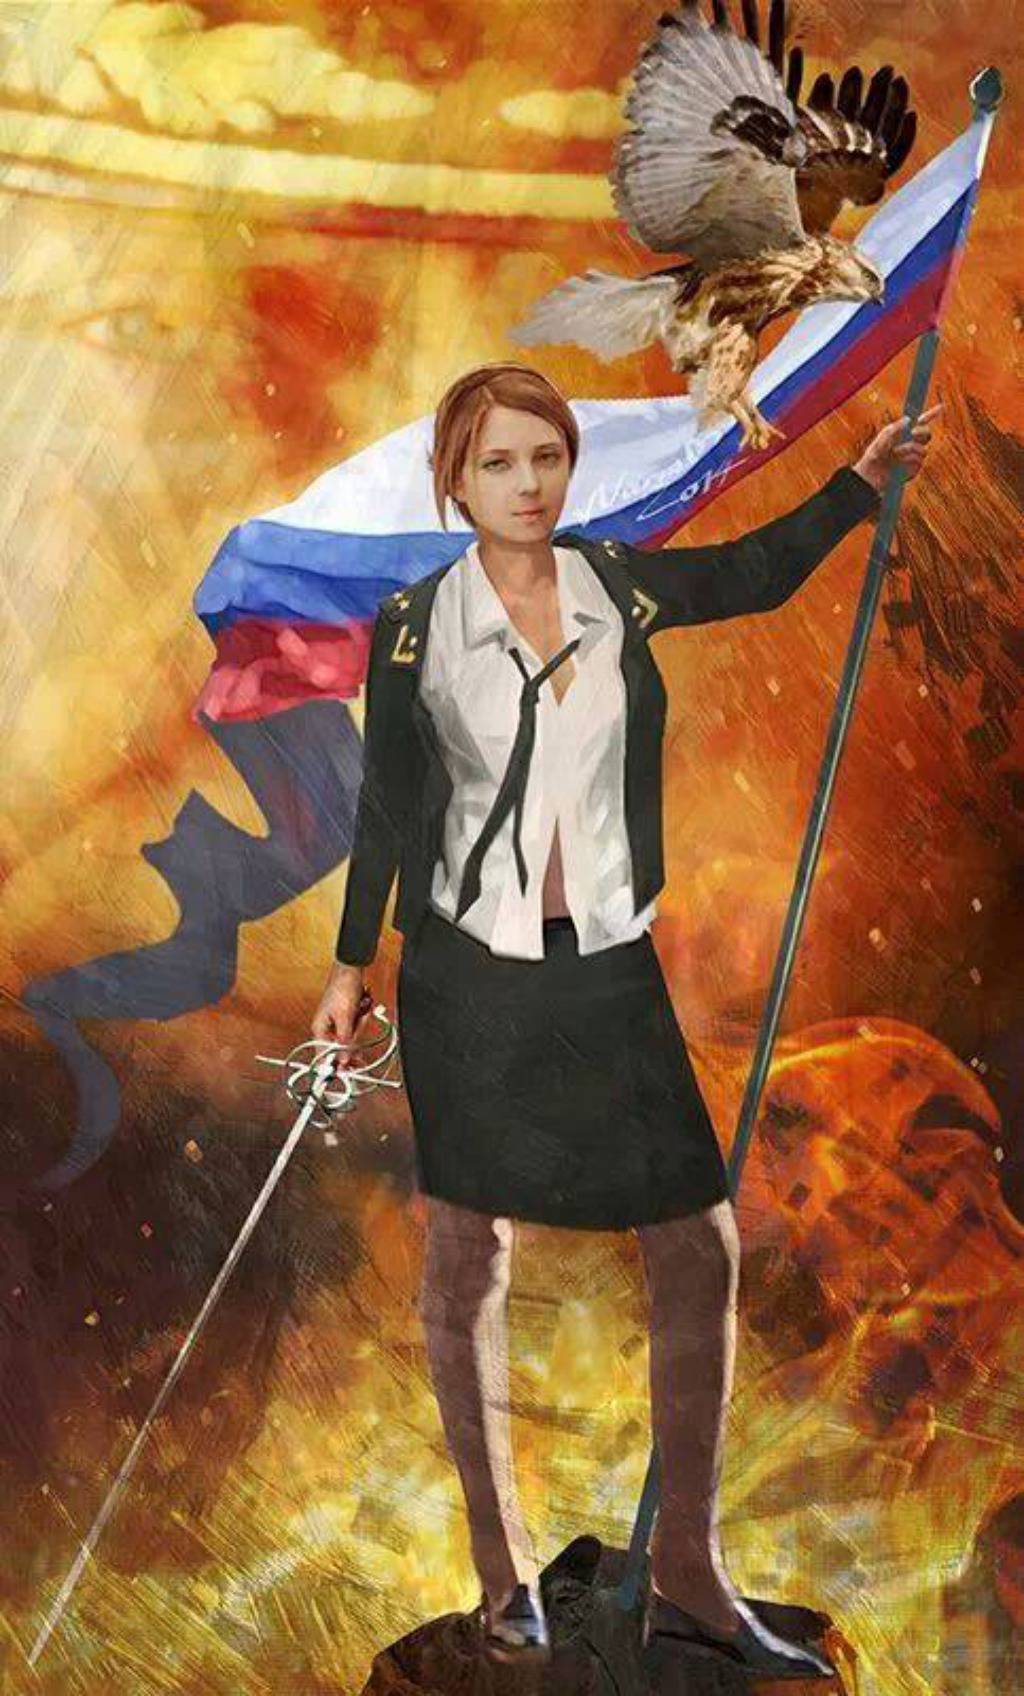 Facebook/Natalia Poklonskaya